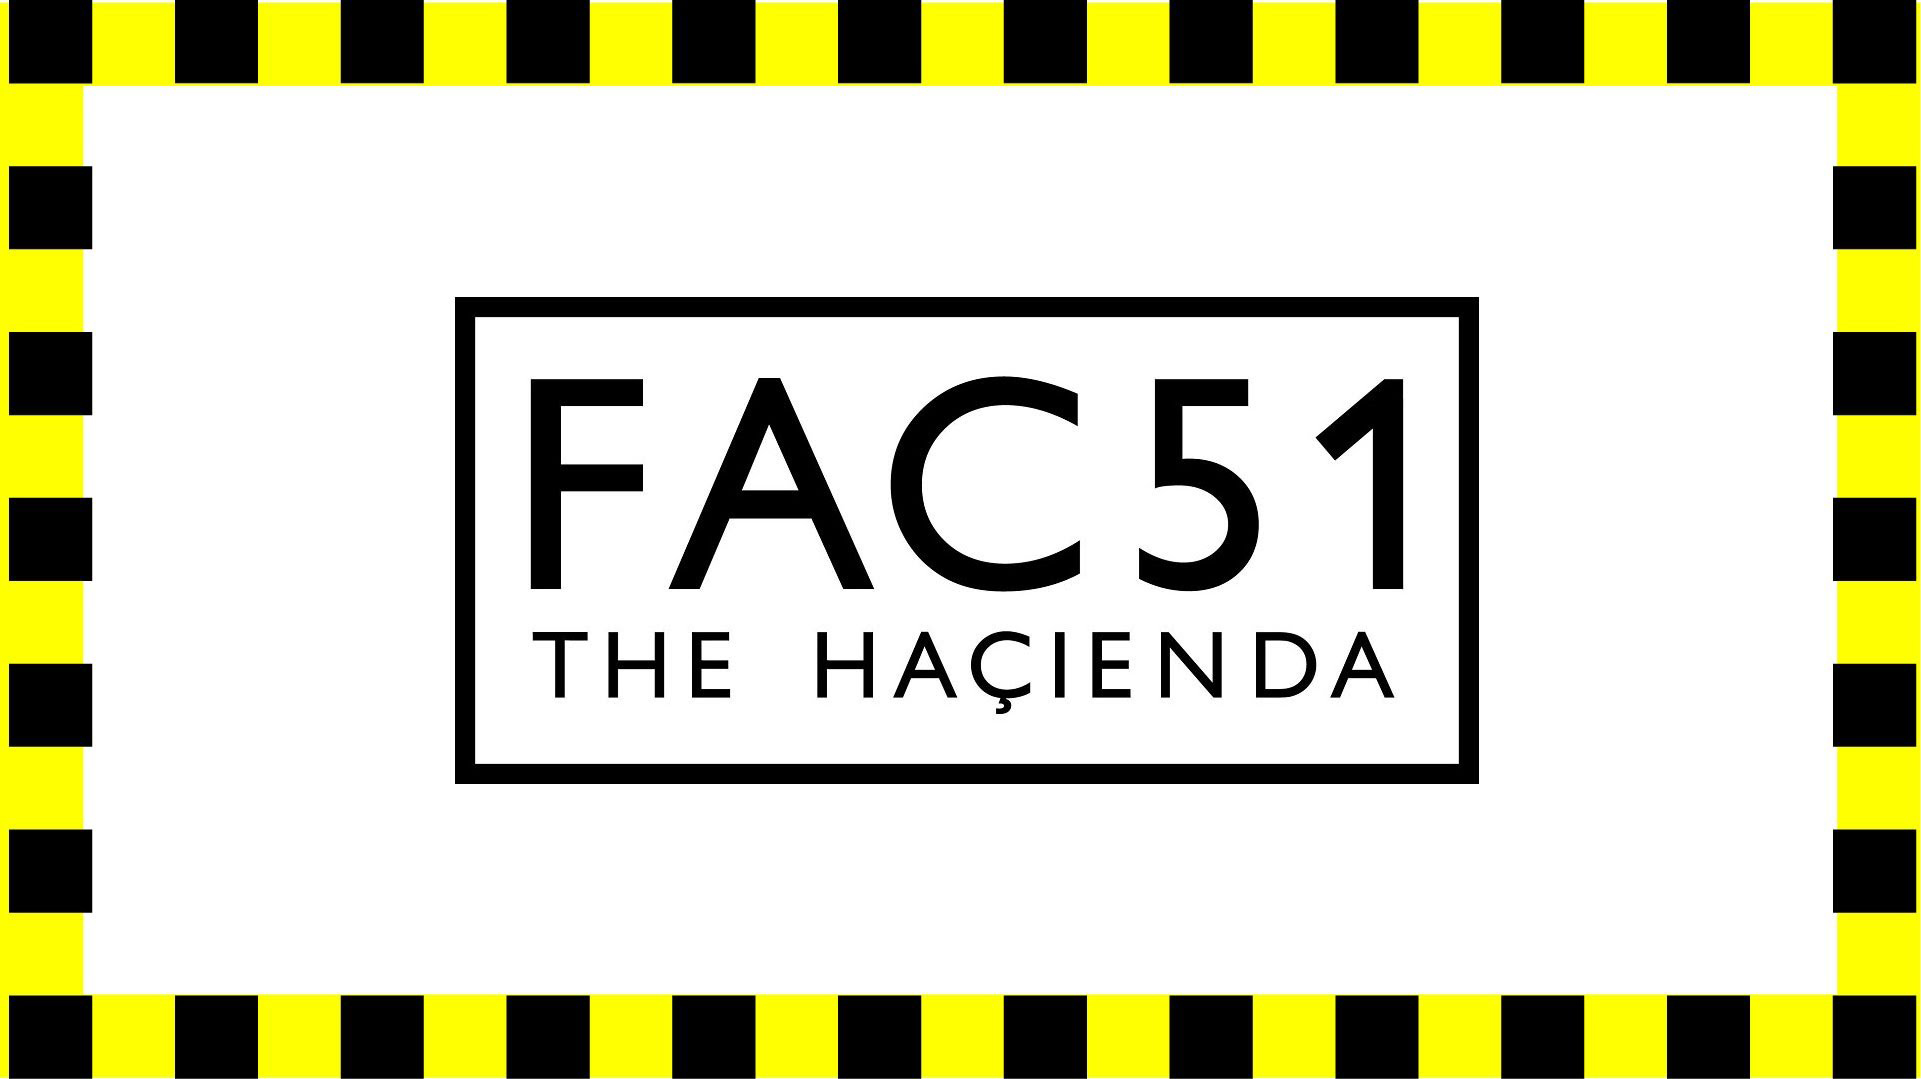 FAC 51 The Hacienda